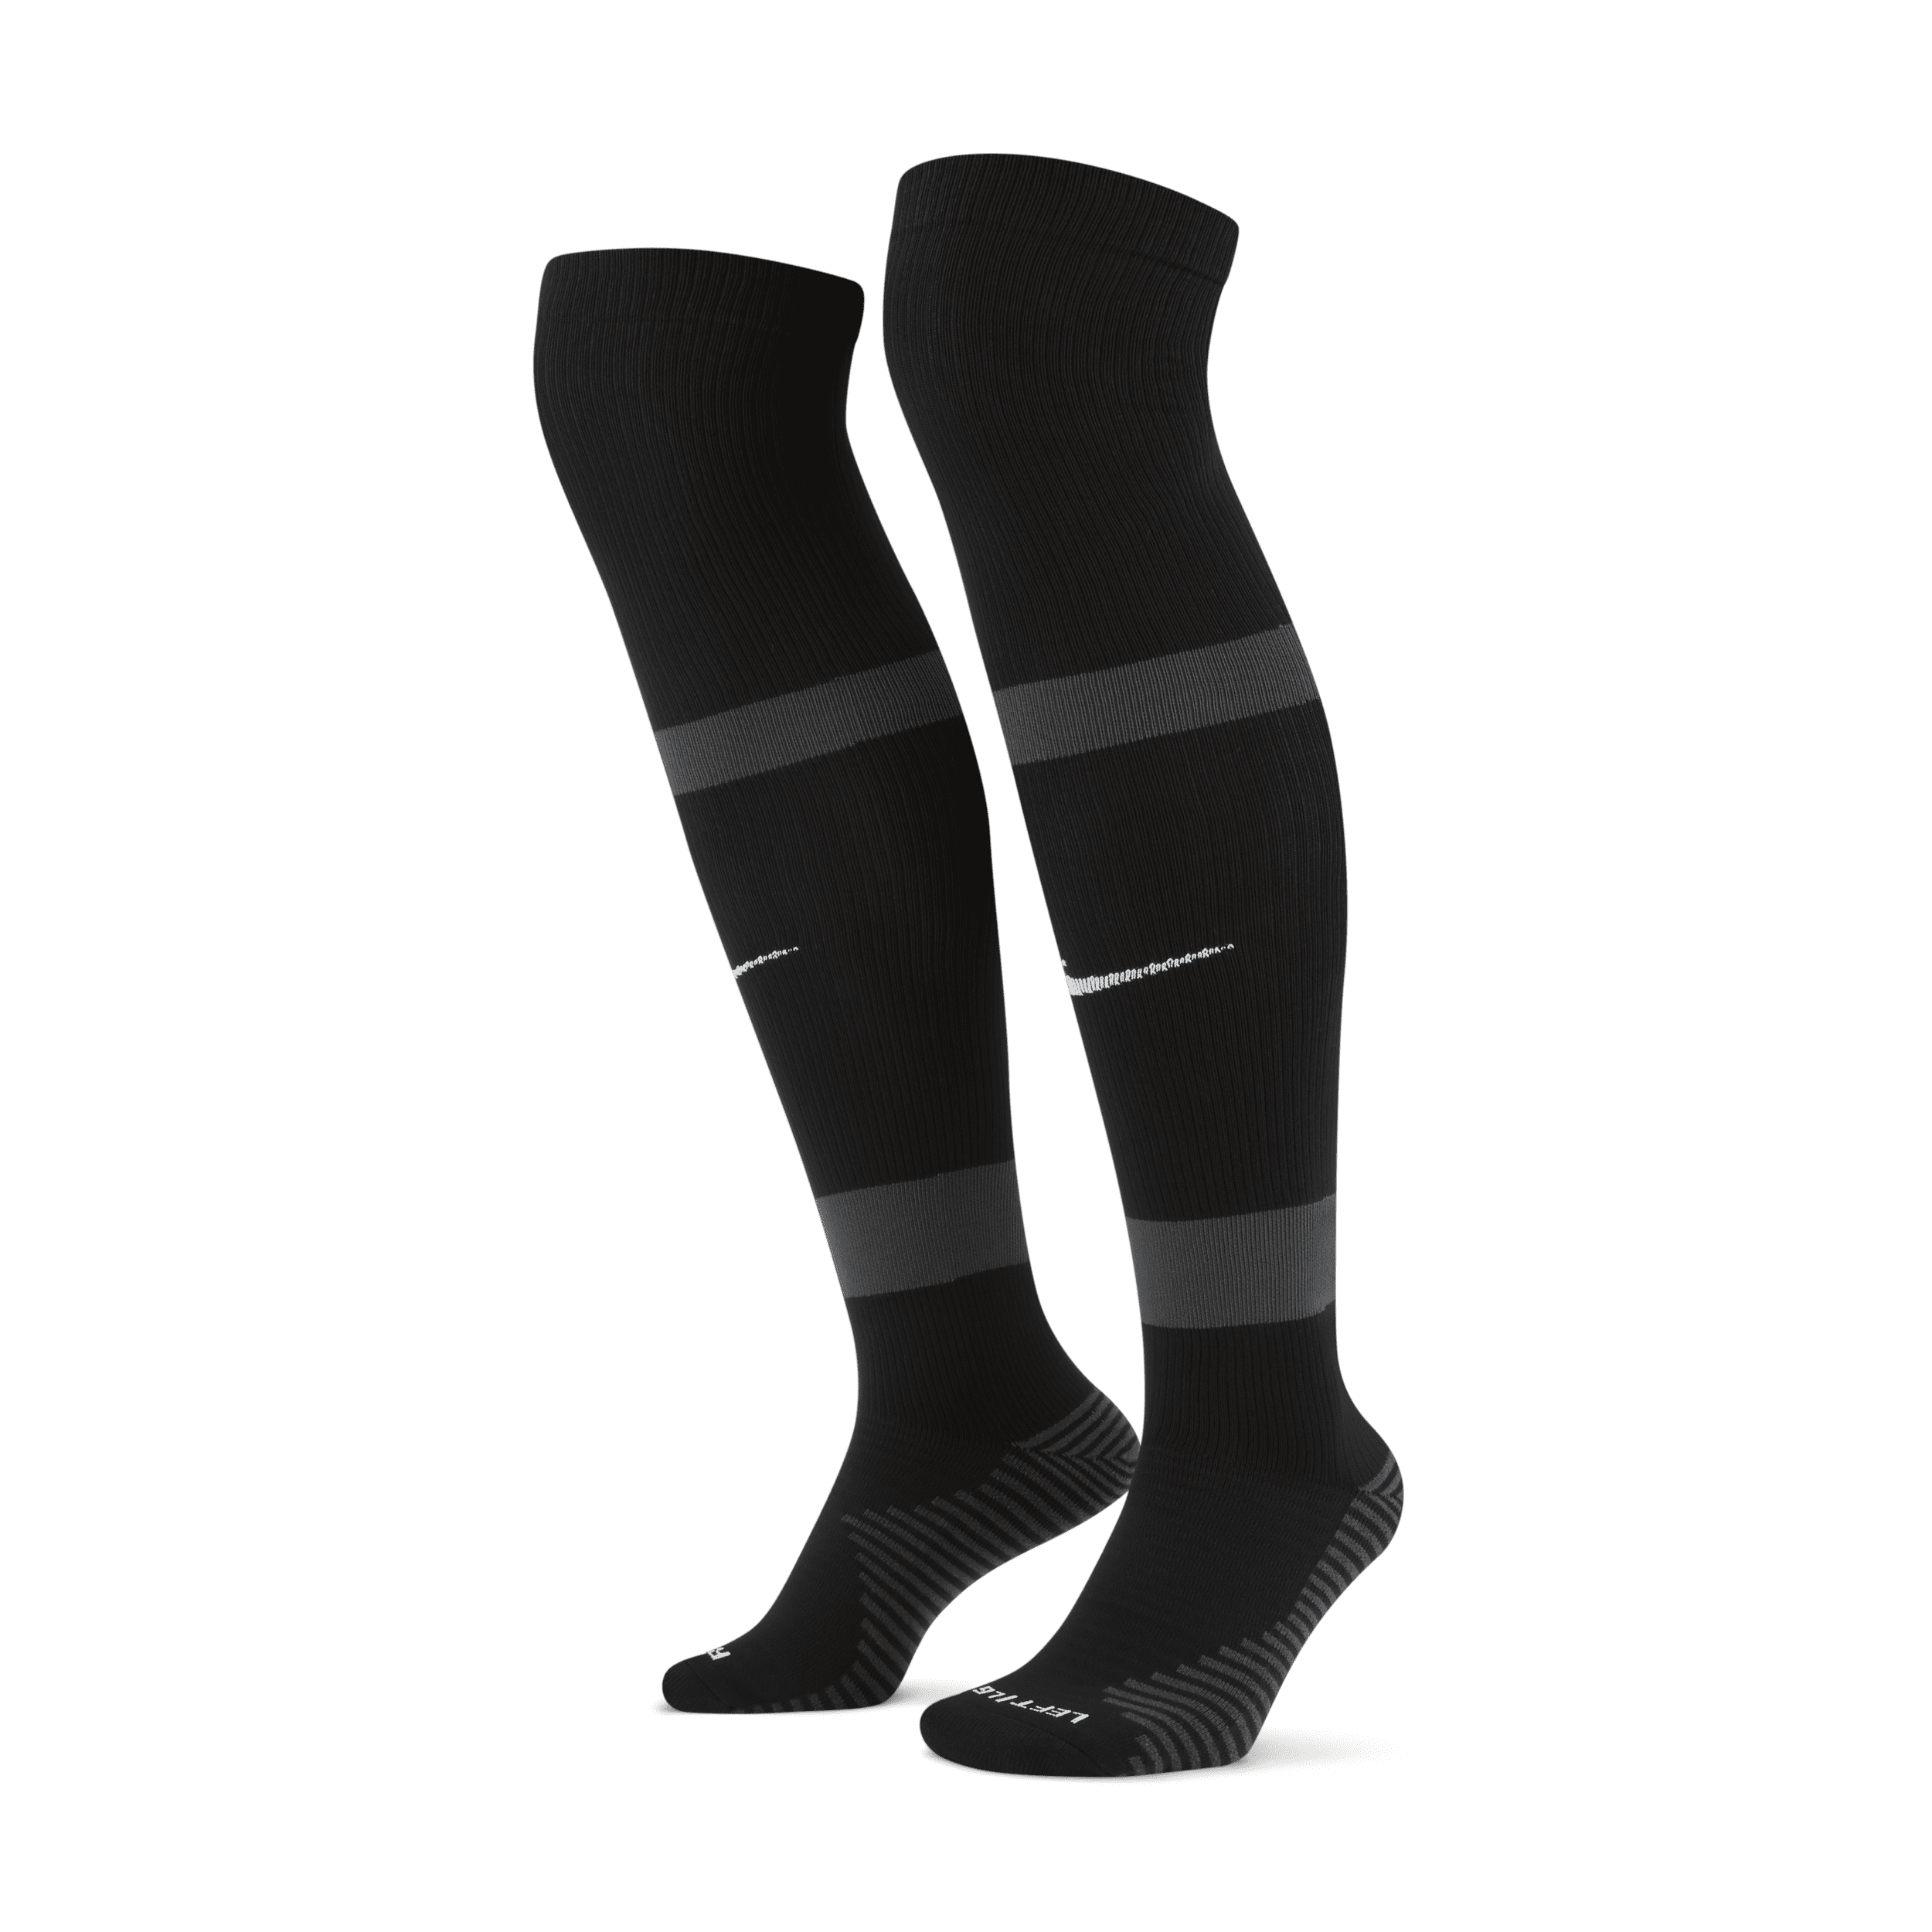 Calze da calcio al ginocchio Nike MatchFit - Nero